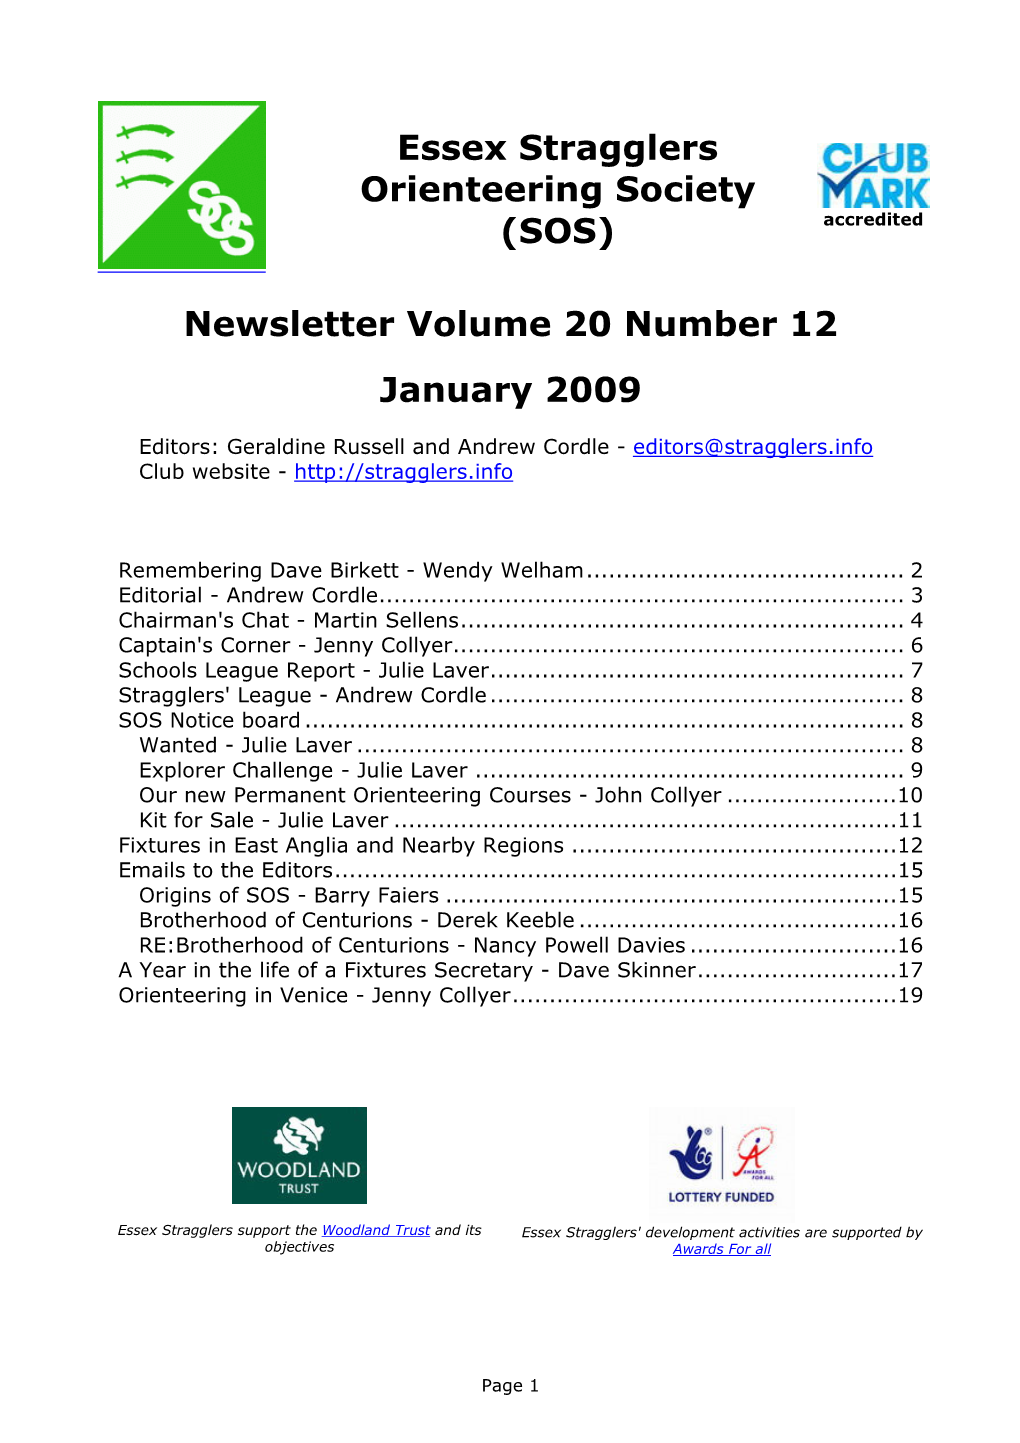 Essex Stragglers Orienteering Society (SOS) Newsletter Volume 20